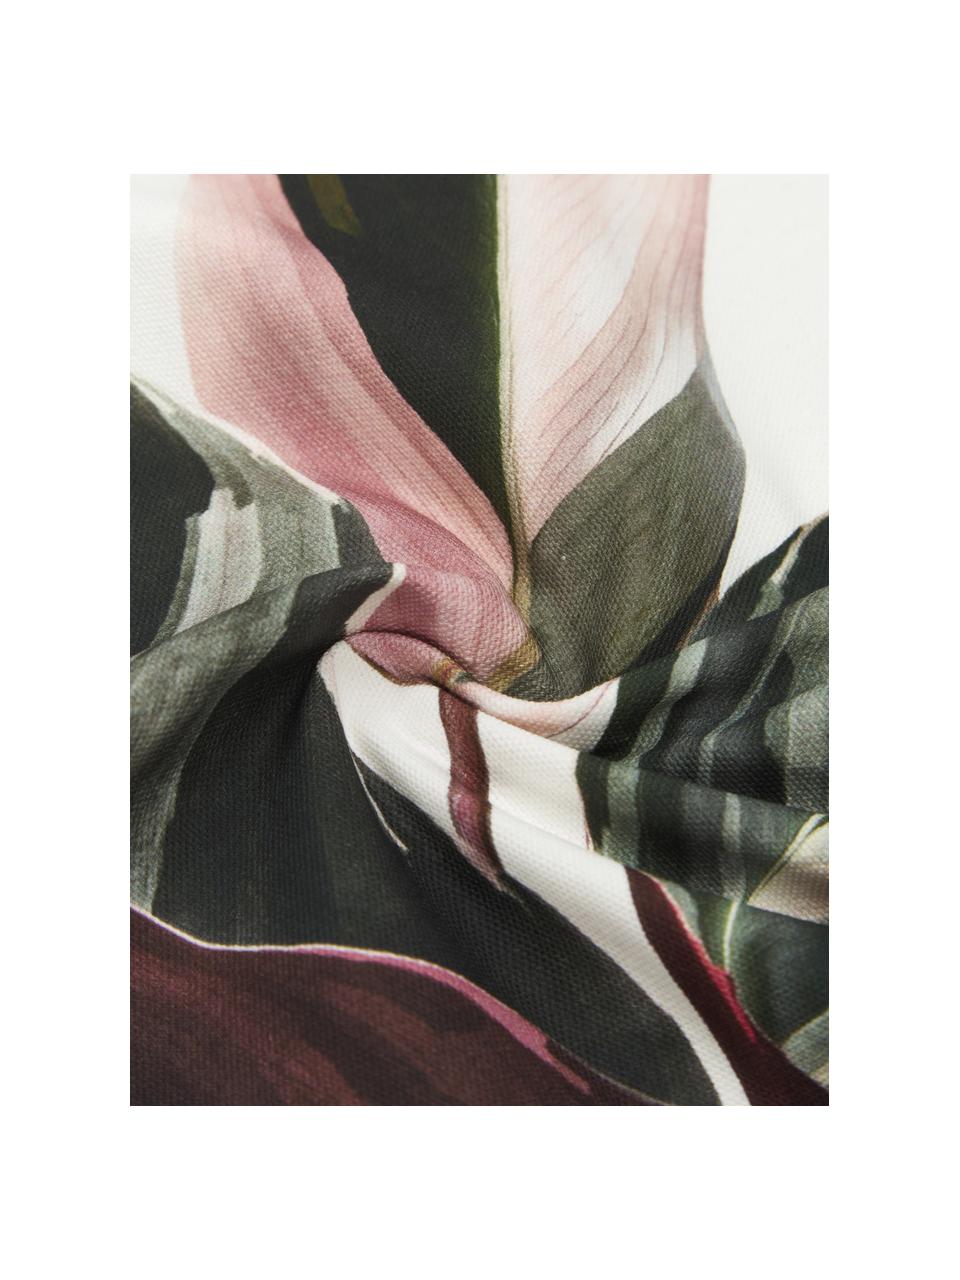 Baumwoll-Kissenhülle Triostar mit floralem Motiv, 100% Baumwolle, Mehrfarbig, B 50 x L 50 cm